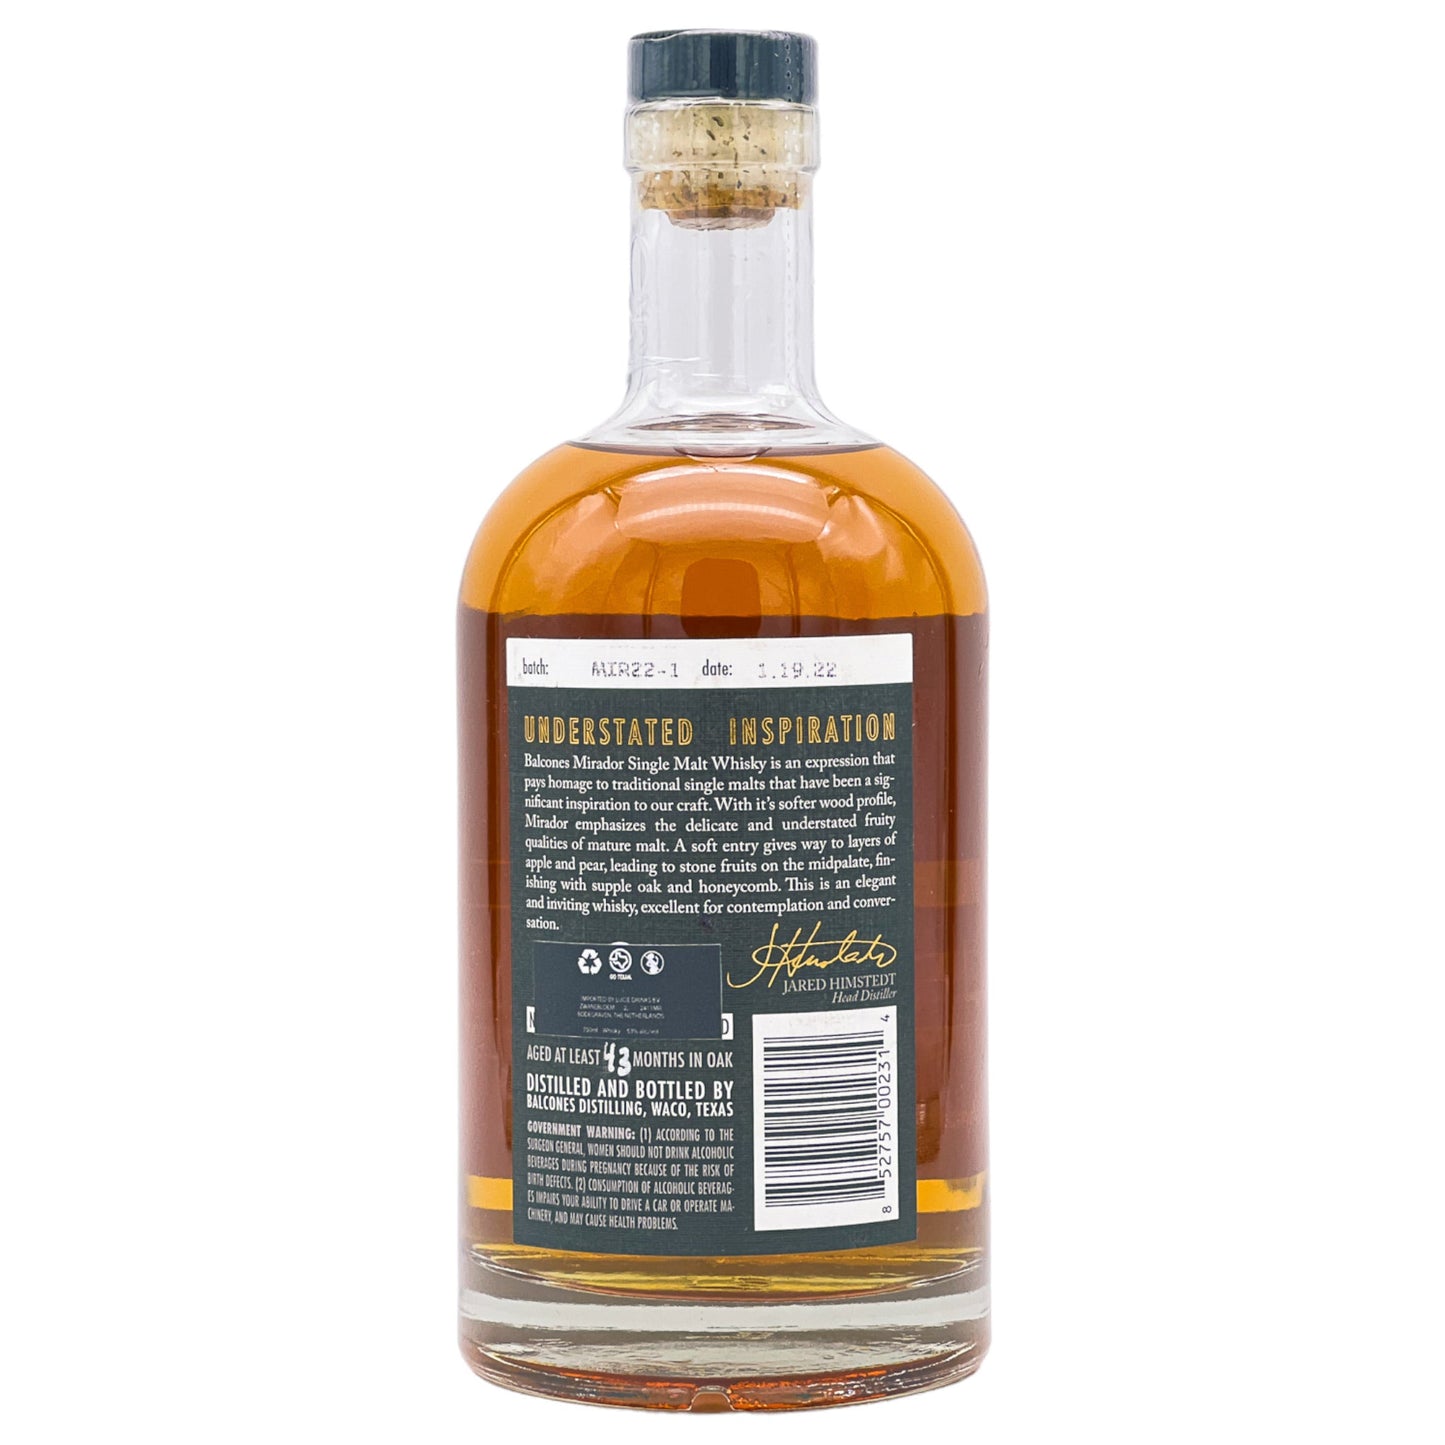 Balcones | Mirador | Pot Distilled 2022 | Texas Single Malt Whisky | 0,7l | 53%GET A BOTTLE